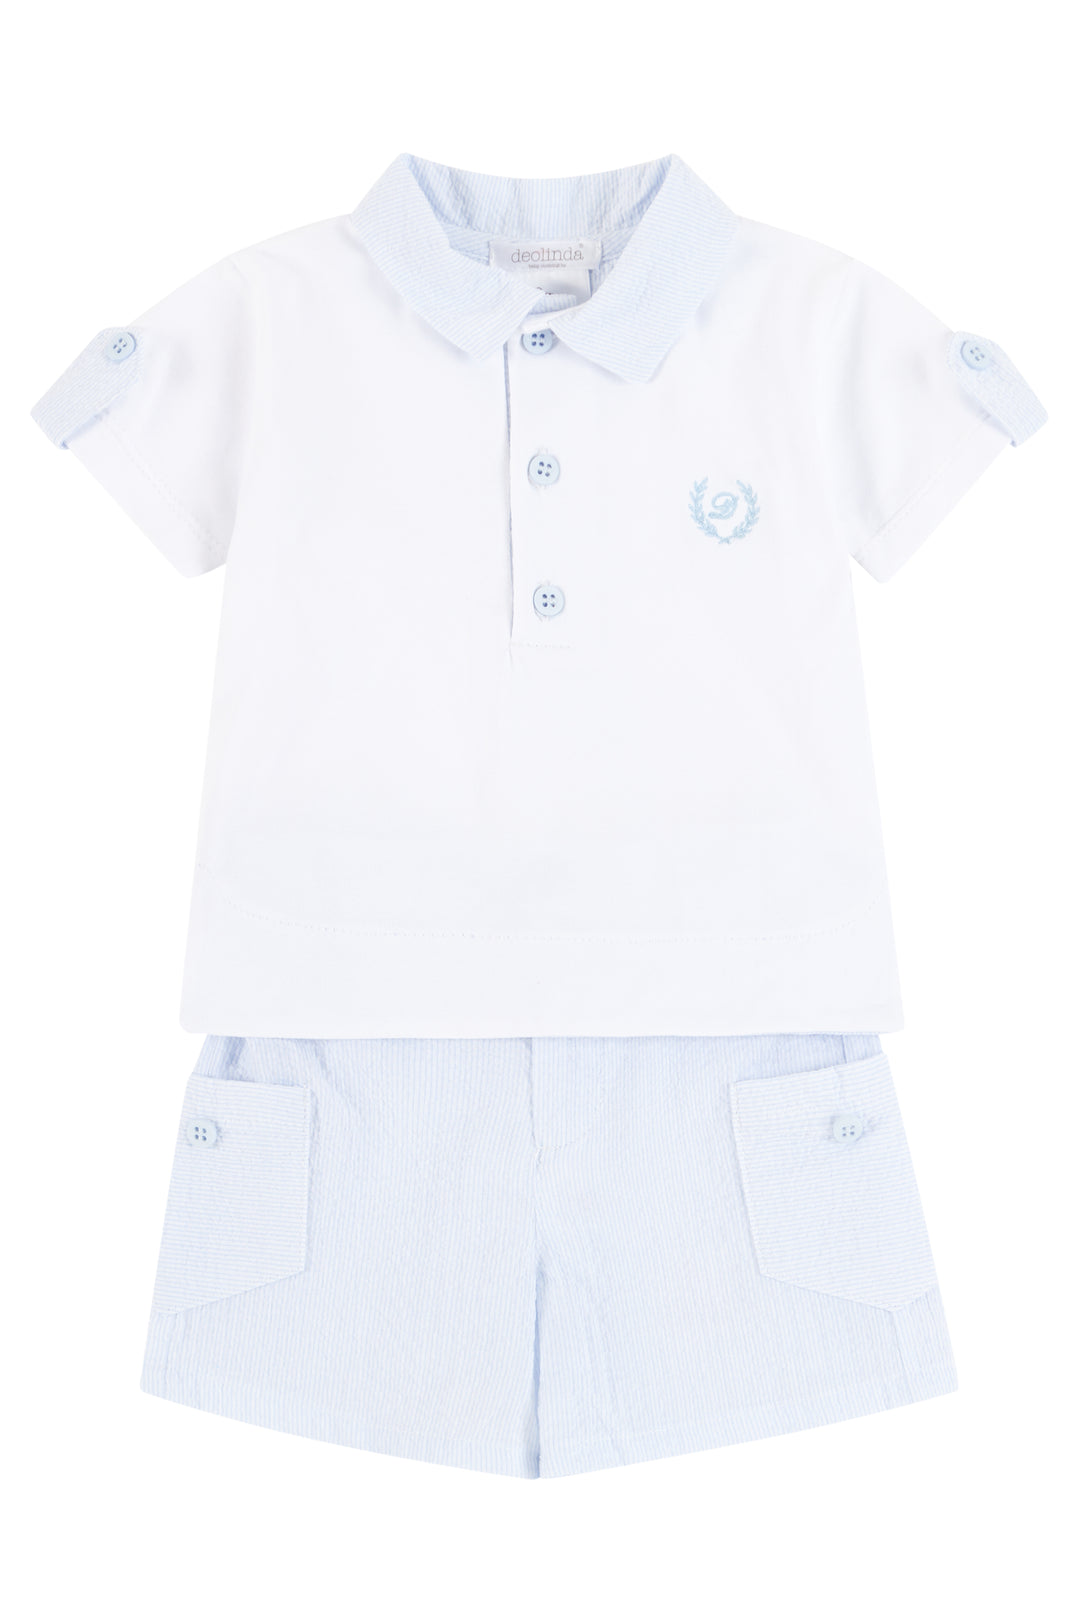 Deolinda "Roman" Blue Seersucker Polo Shirt & Shorts | Millie and John